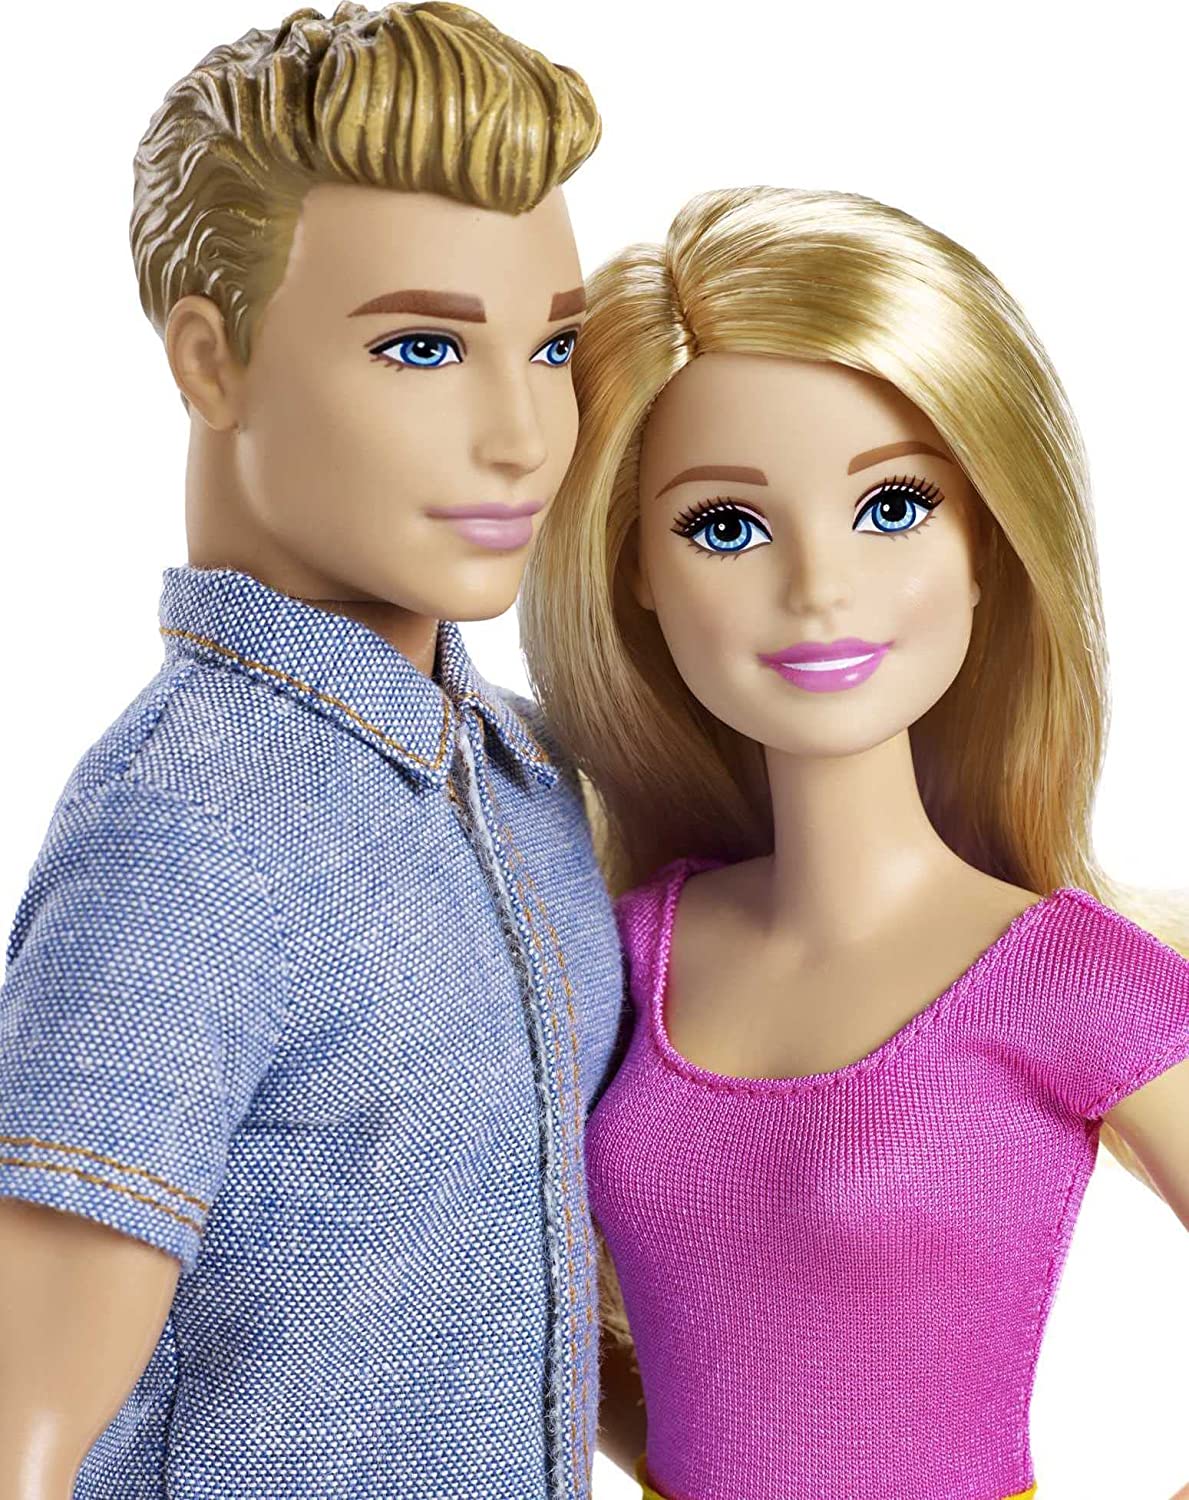 Barbie e Ken juntos